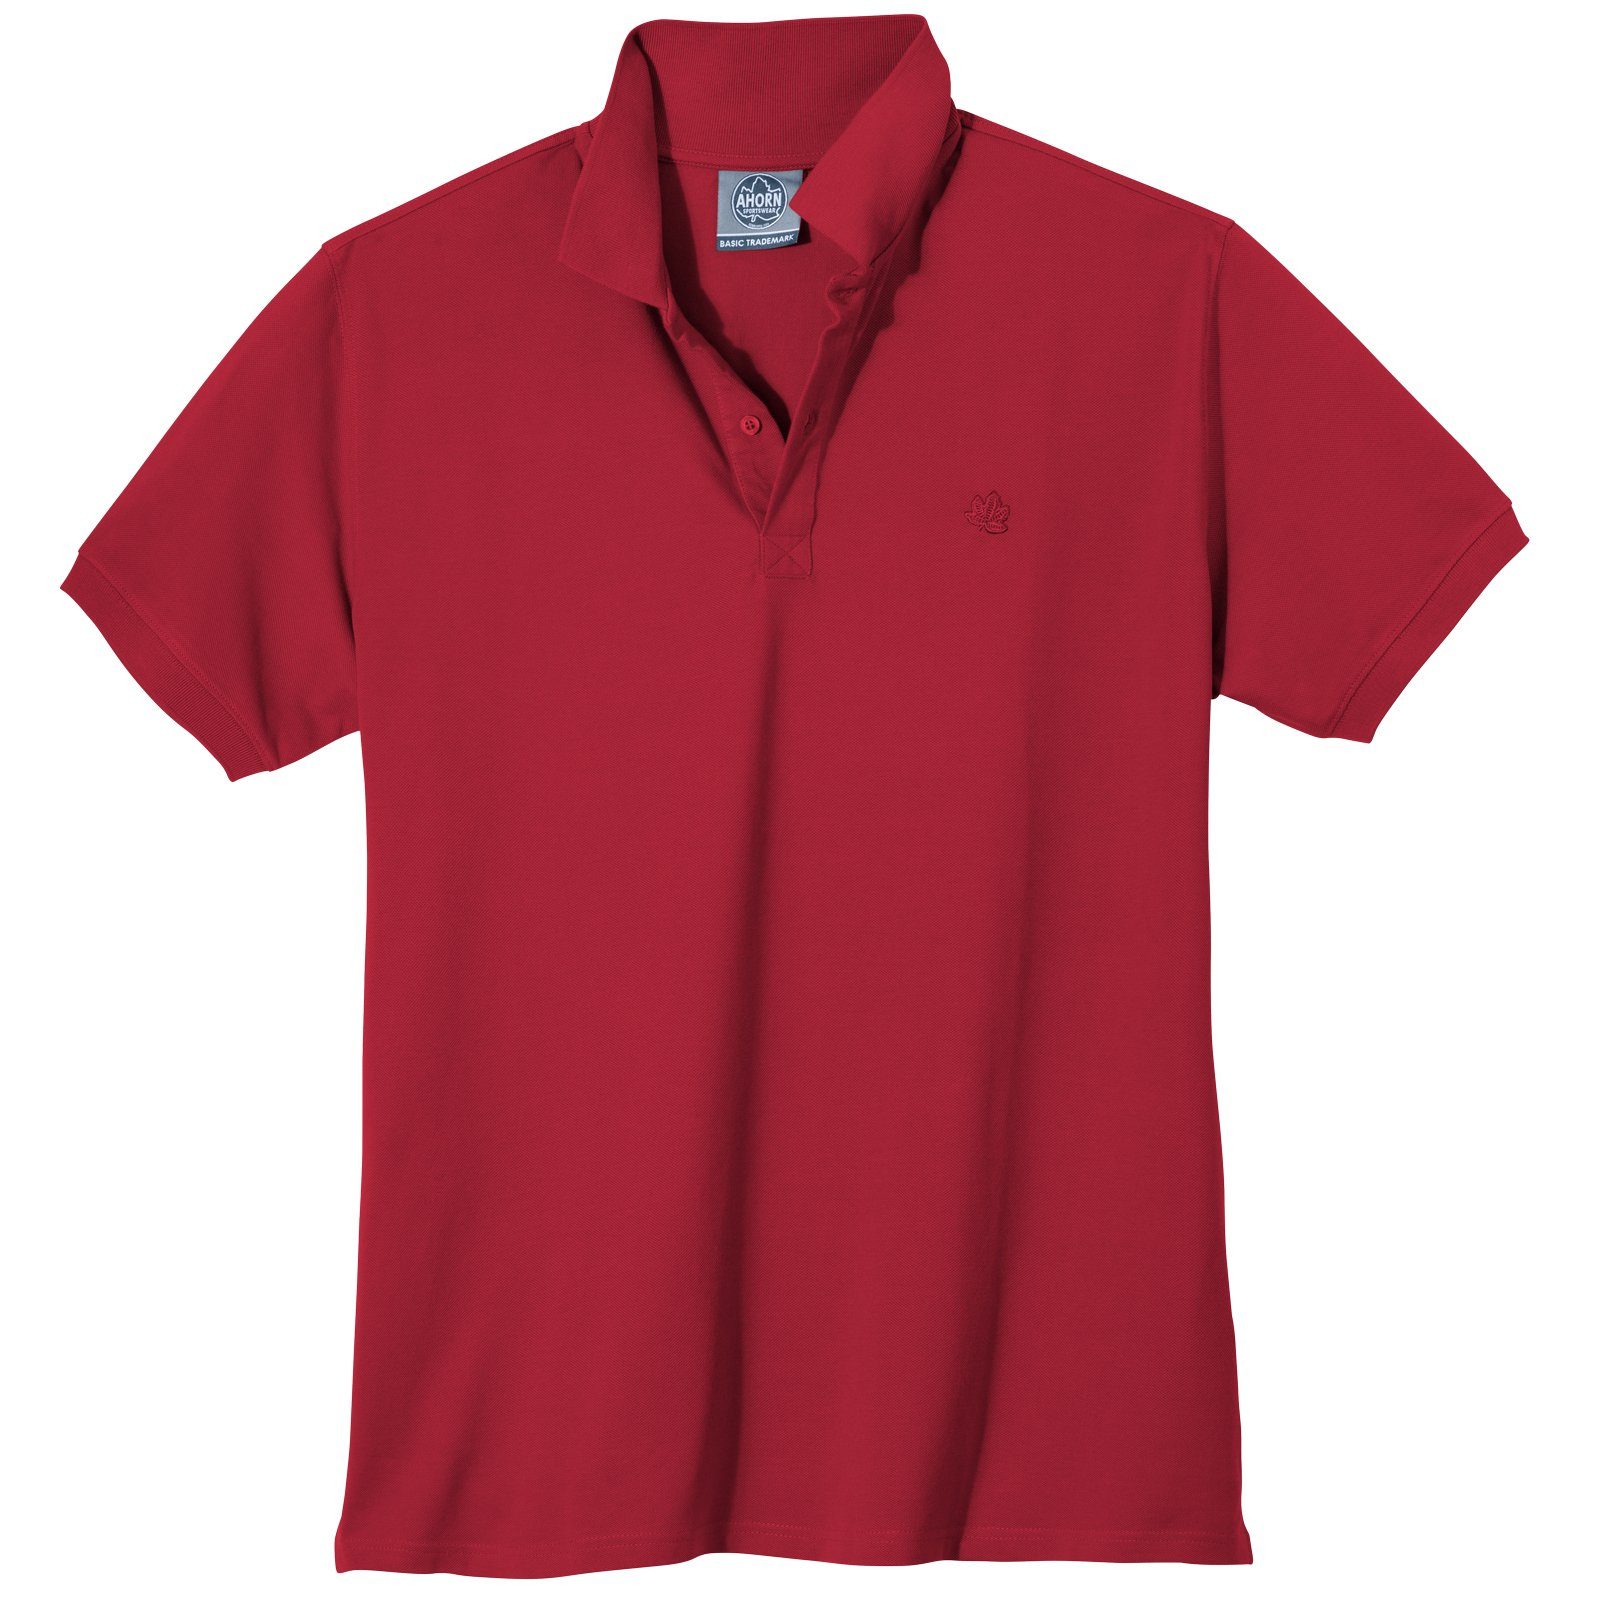 AHORN SPORTSWEAR Poloshirt Herren Sportswear Ahorn rot Übergrößen Poloshirt